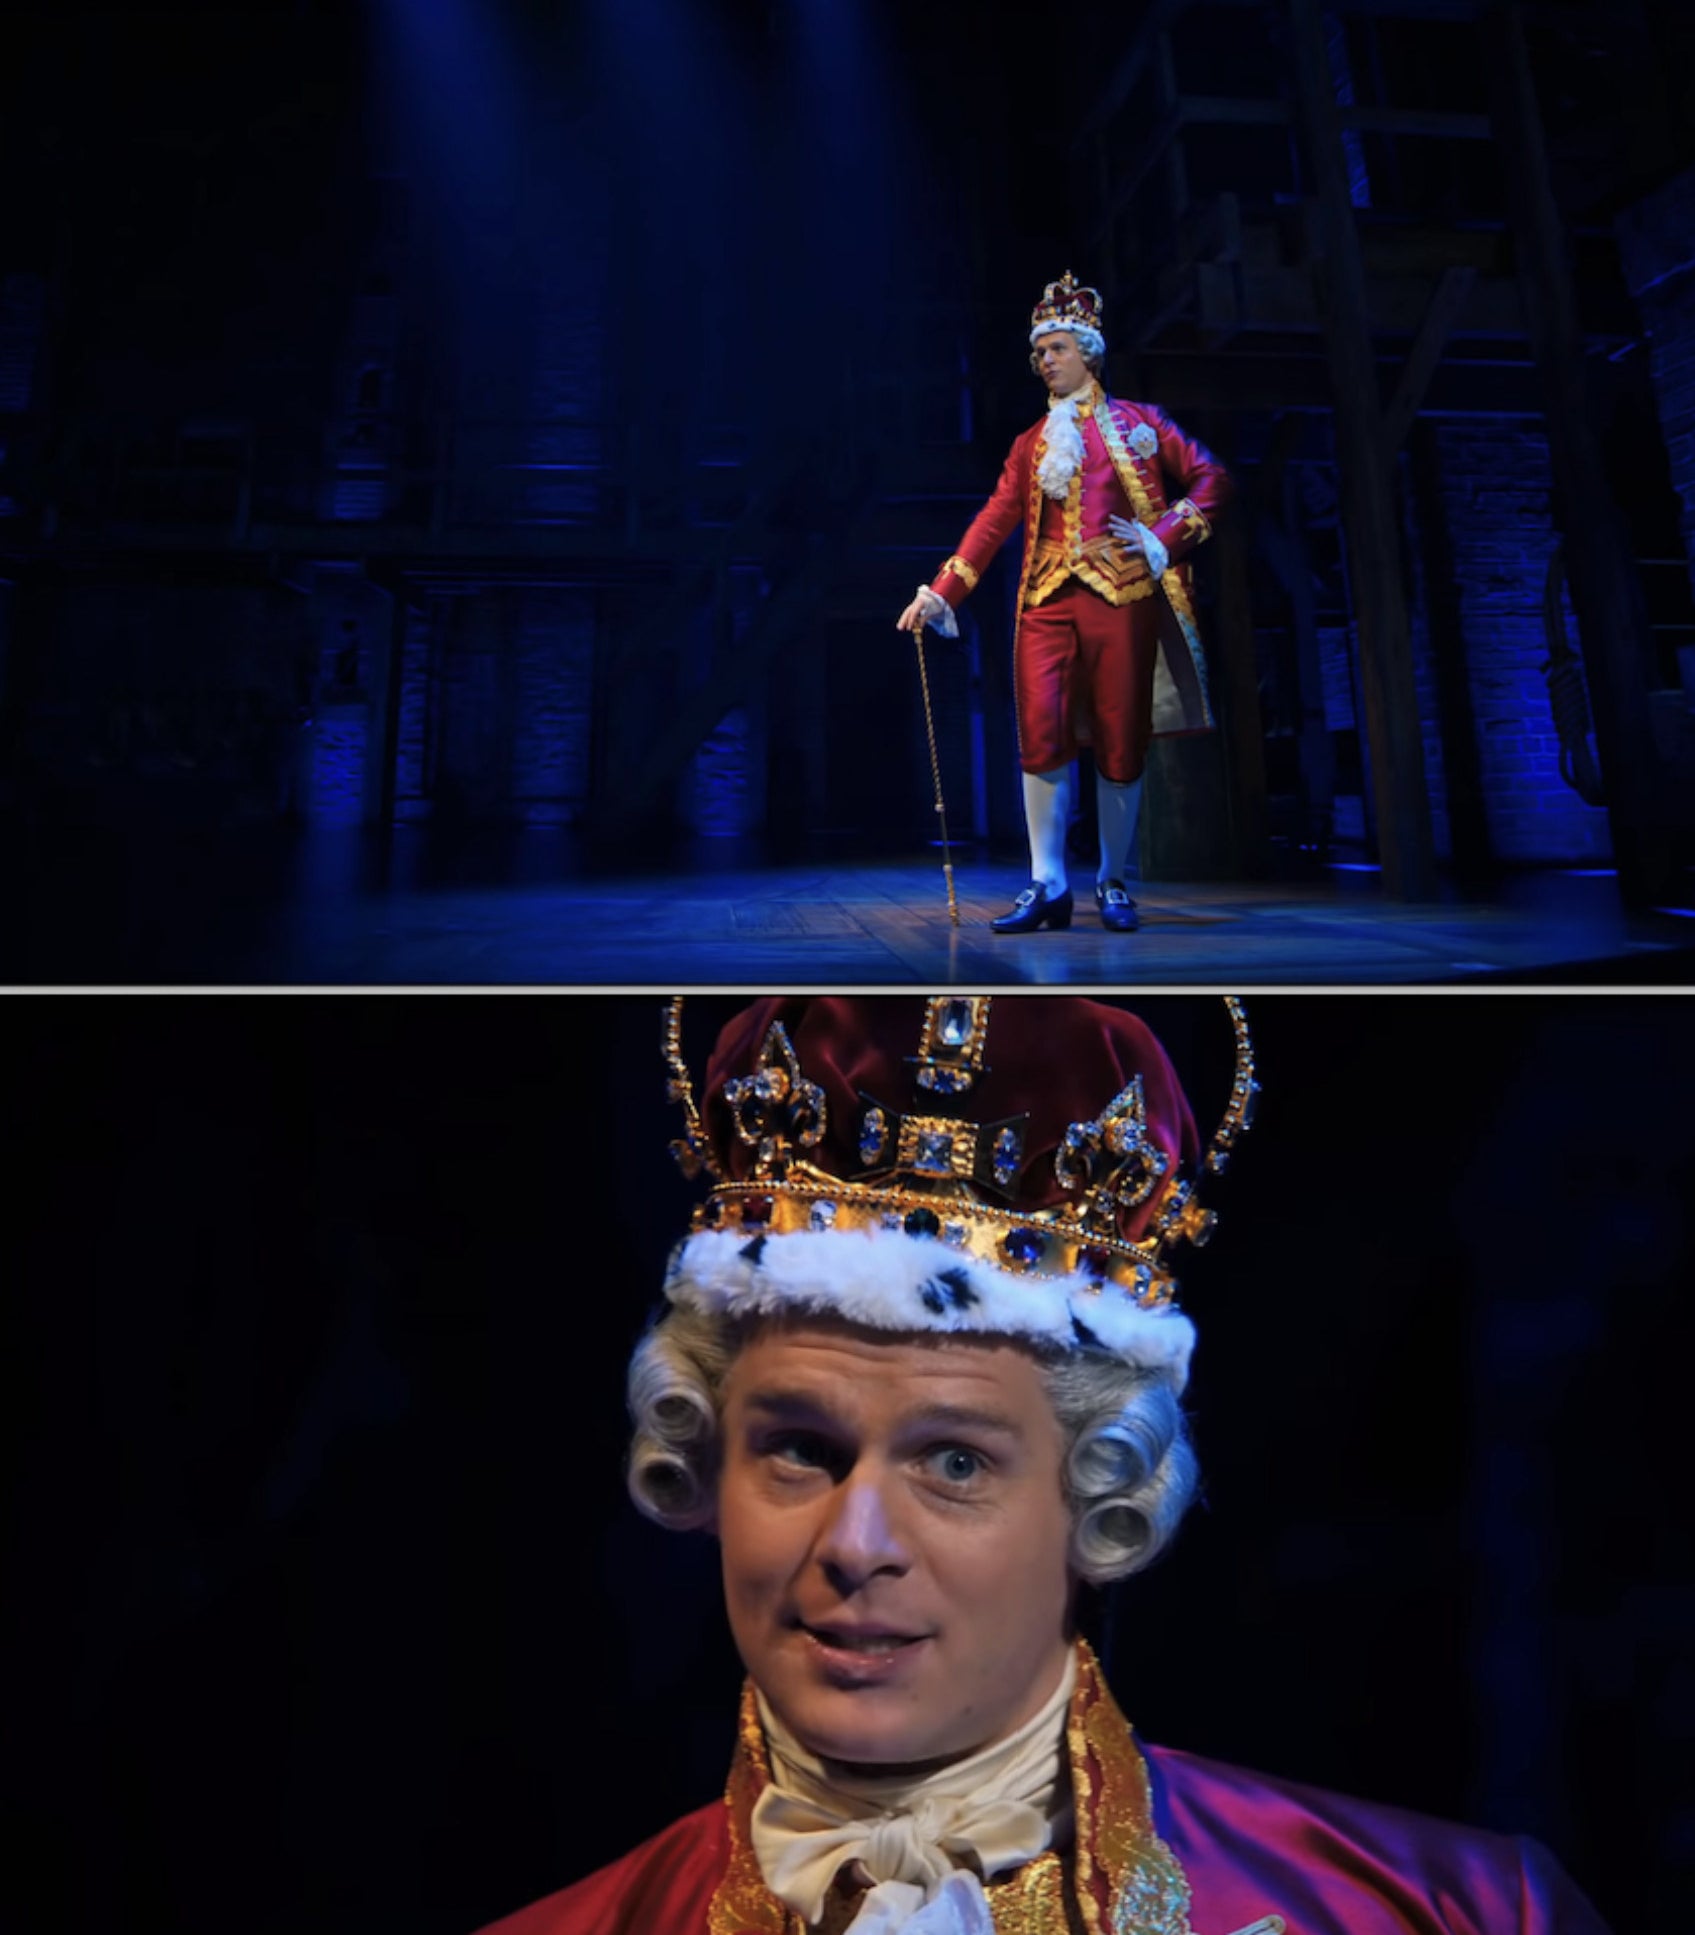 Jonathan Groff dressed as King George III on stage